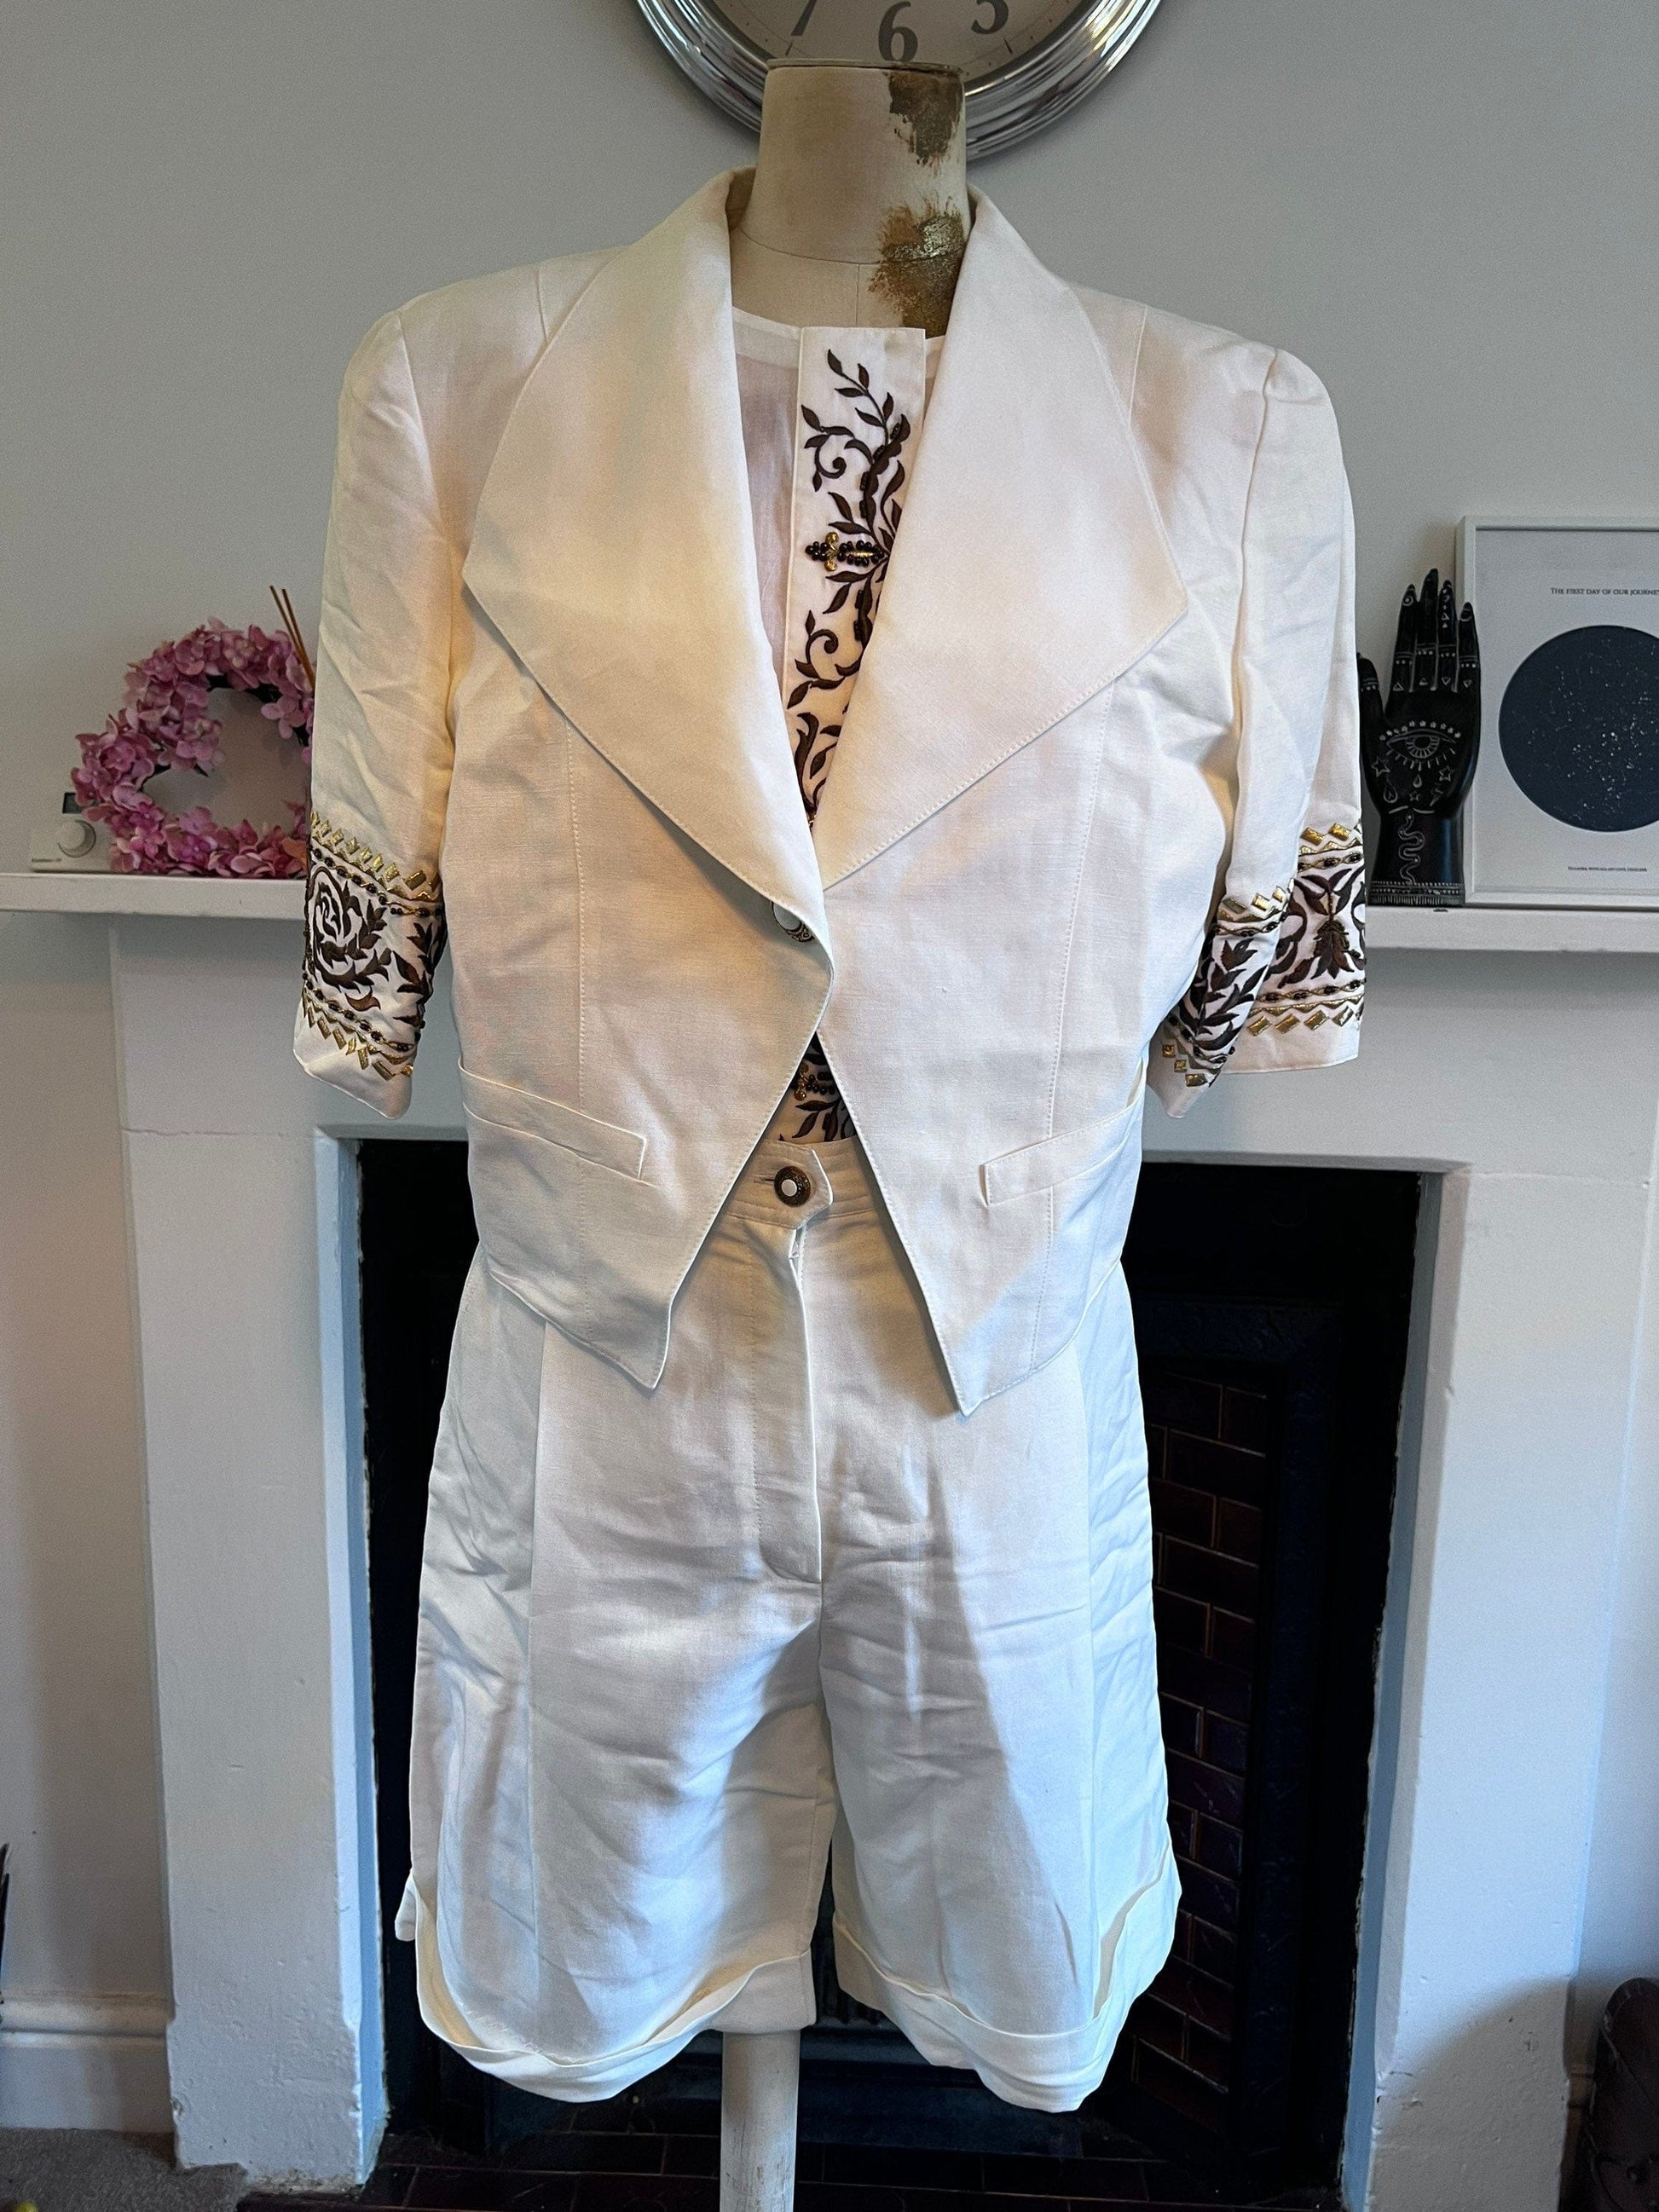 Vintage Suit Three Piece Suit Linen Cream 1980s Shorts Blouse and Jacket Suit - West German - Unworn Suit Still Tagged ! Brand New Vintage